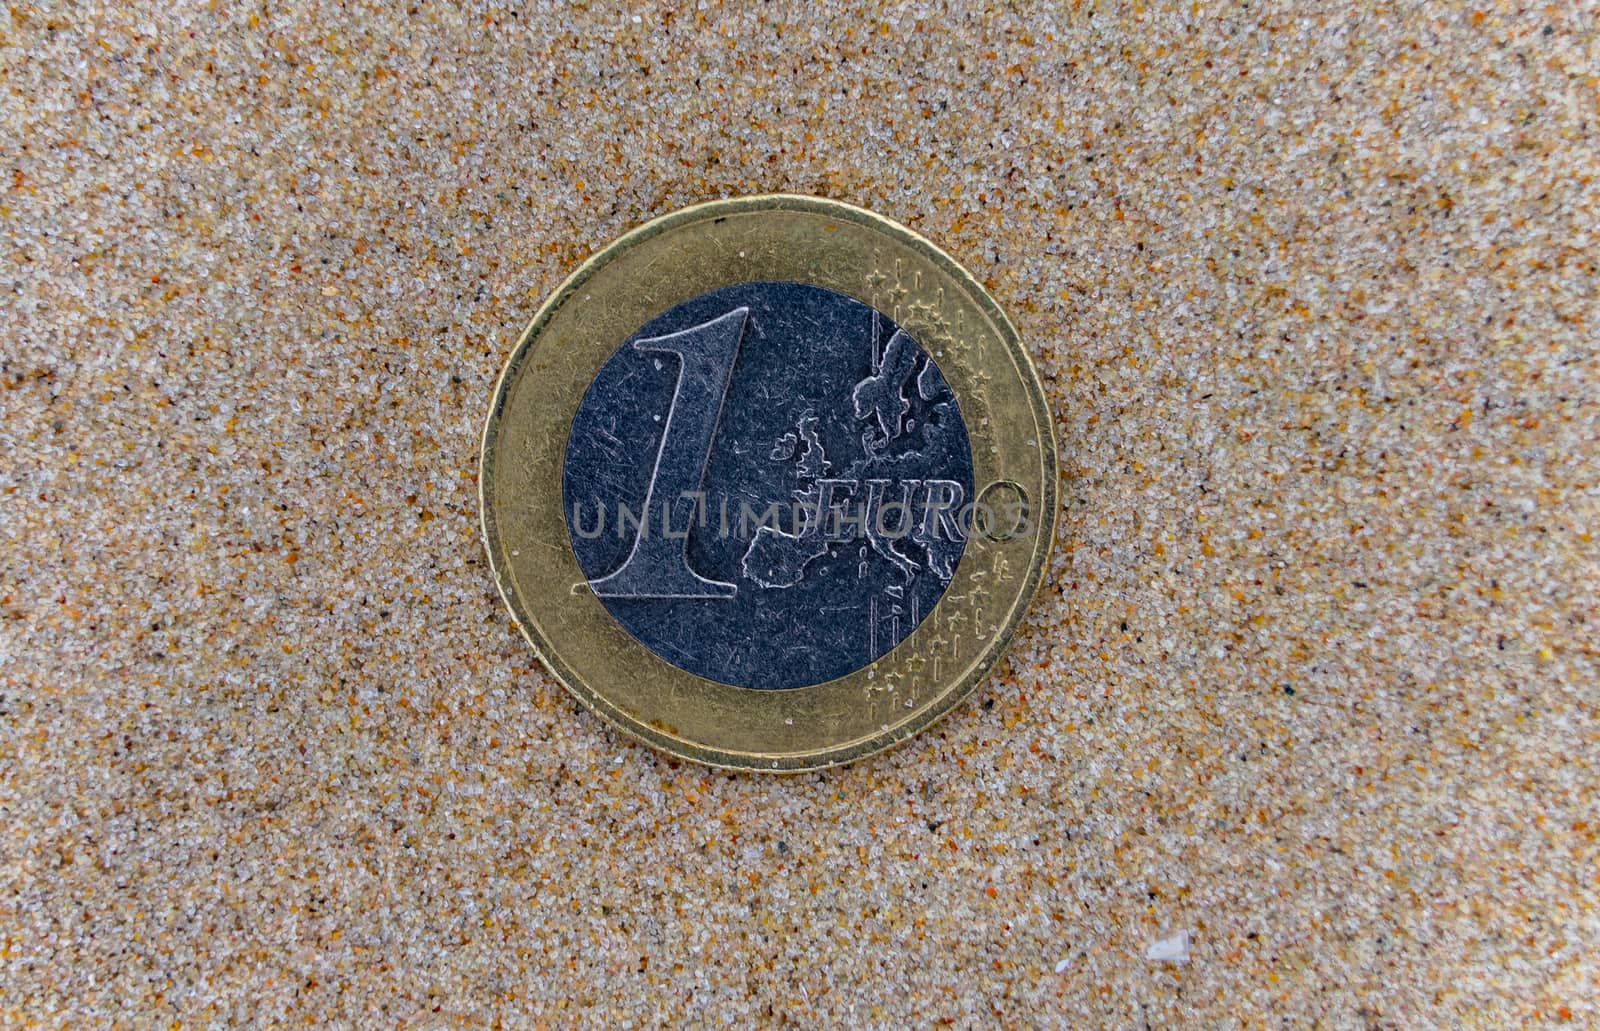 1 euro coin on the wet fine sand of a sea beach.